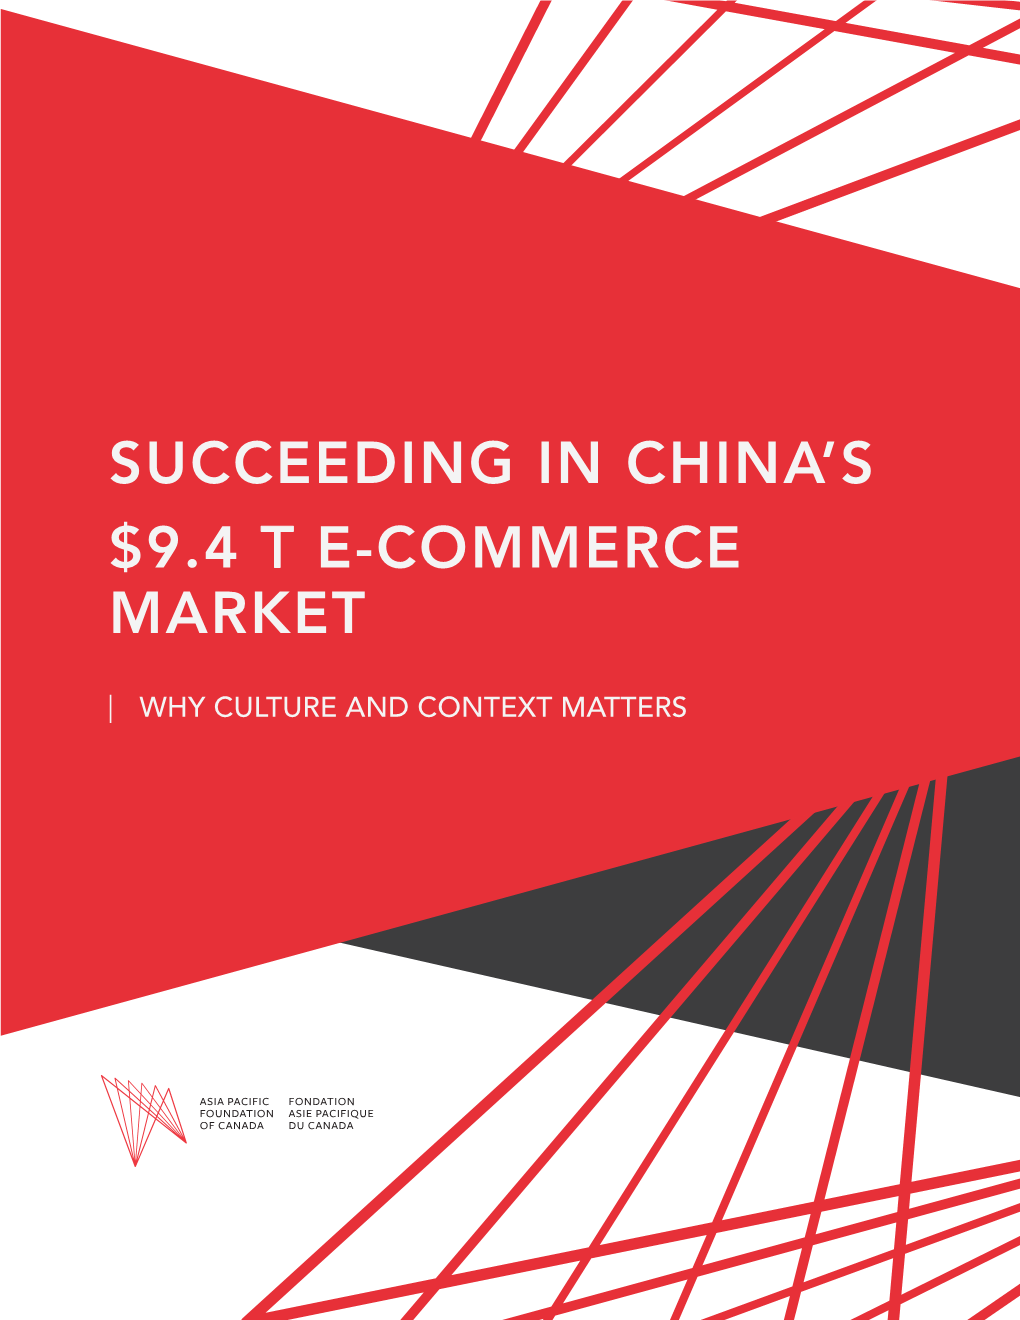 Succeeding in China's $9.4 T E-Commerce Market